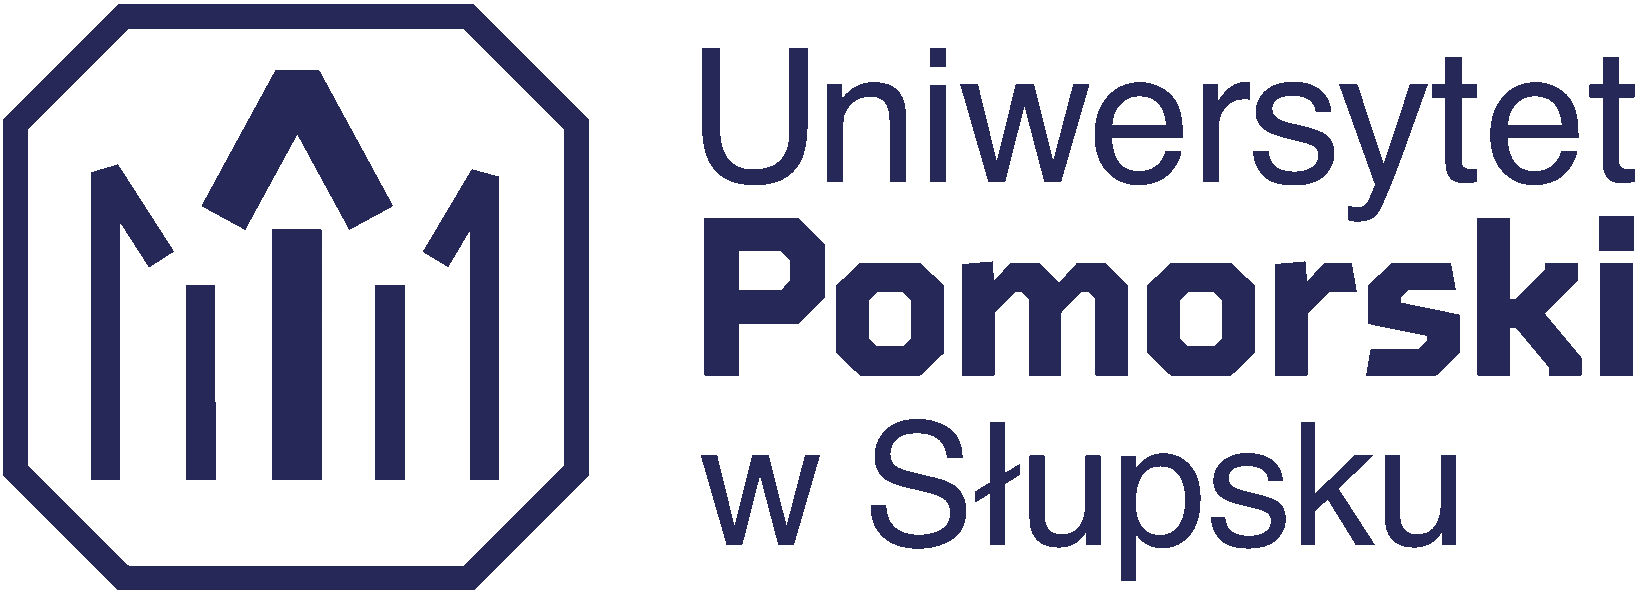 Uniwersytet Pomorski w Słupsku logo